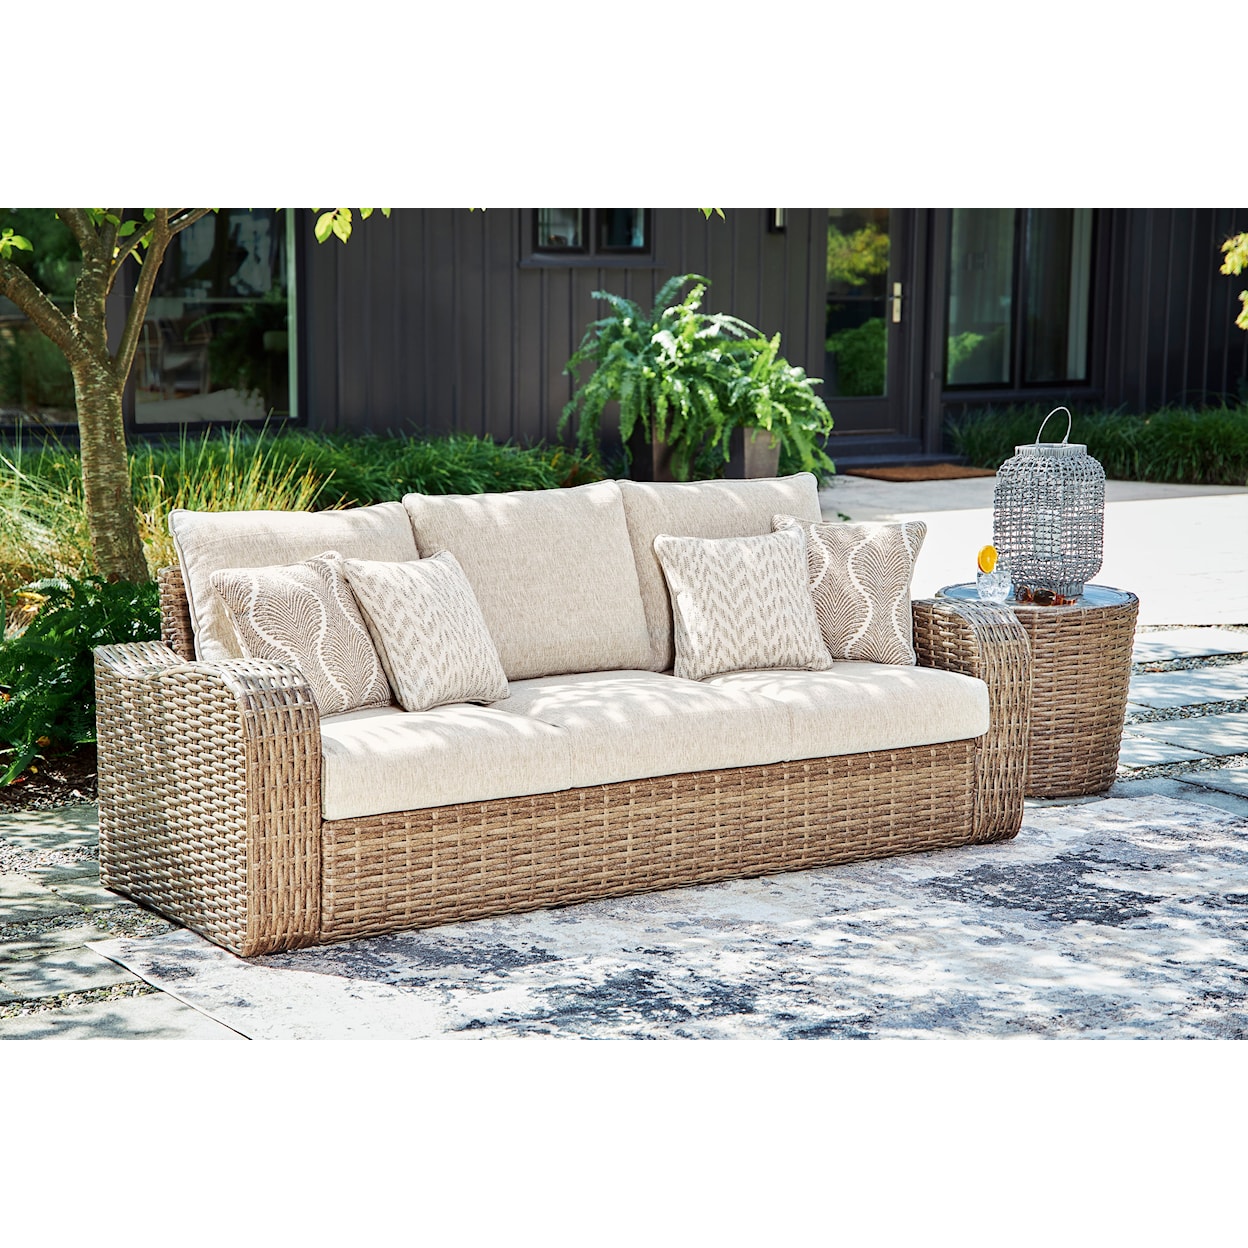 Ashley Furniture Signature Design Sandy Bloom Outdoor Sofa with Cushion